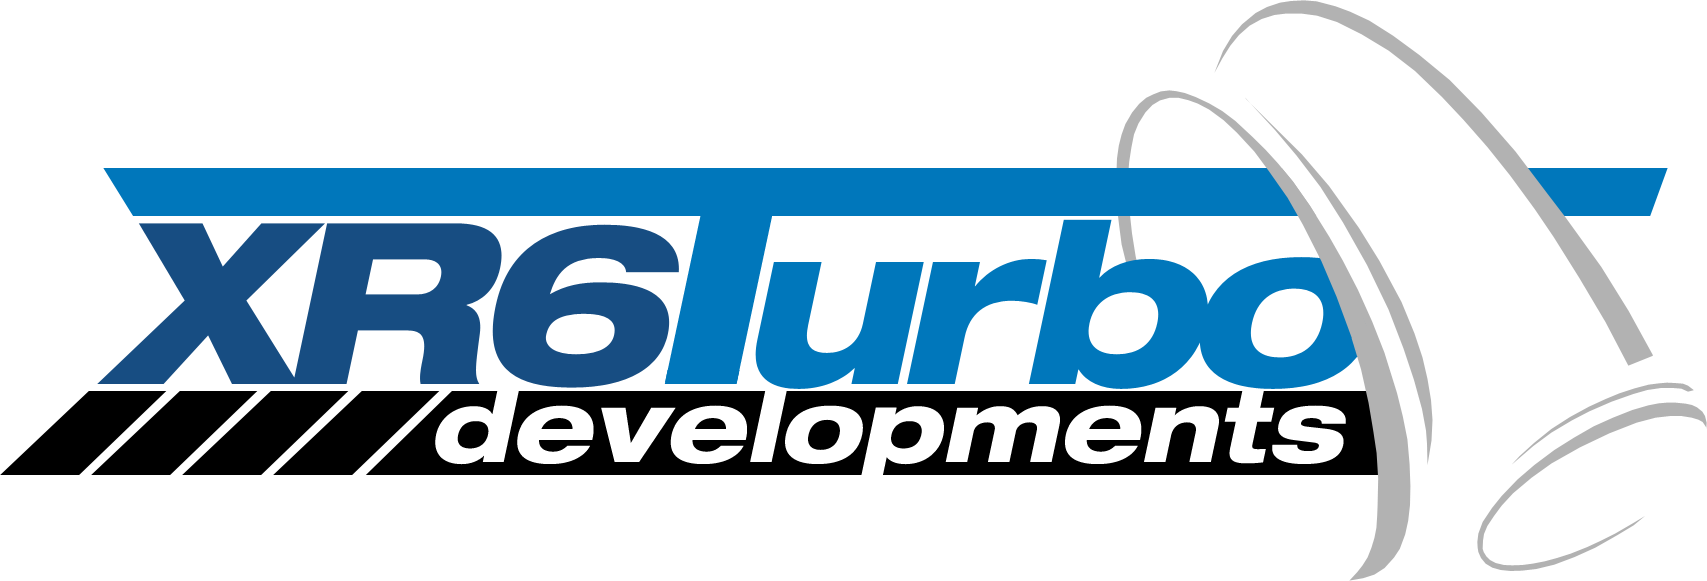 XR6 Turbo Developments logo